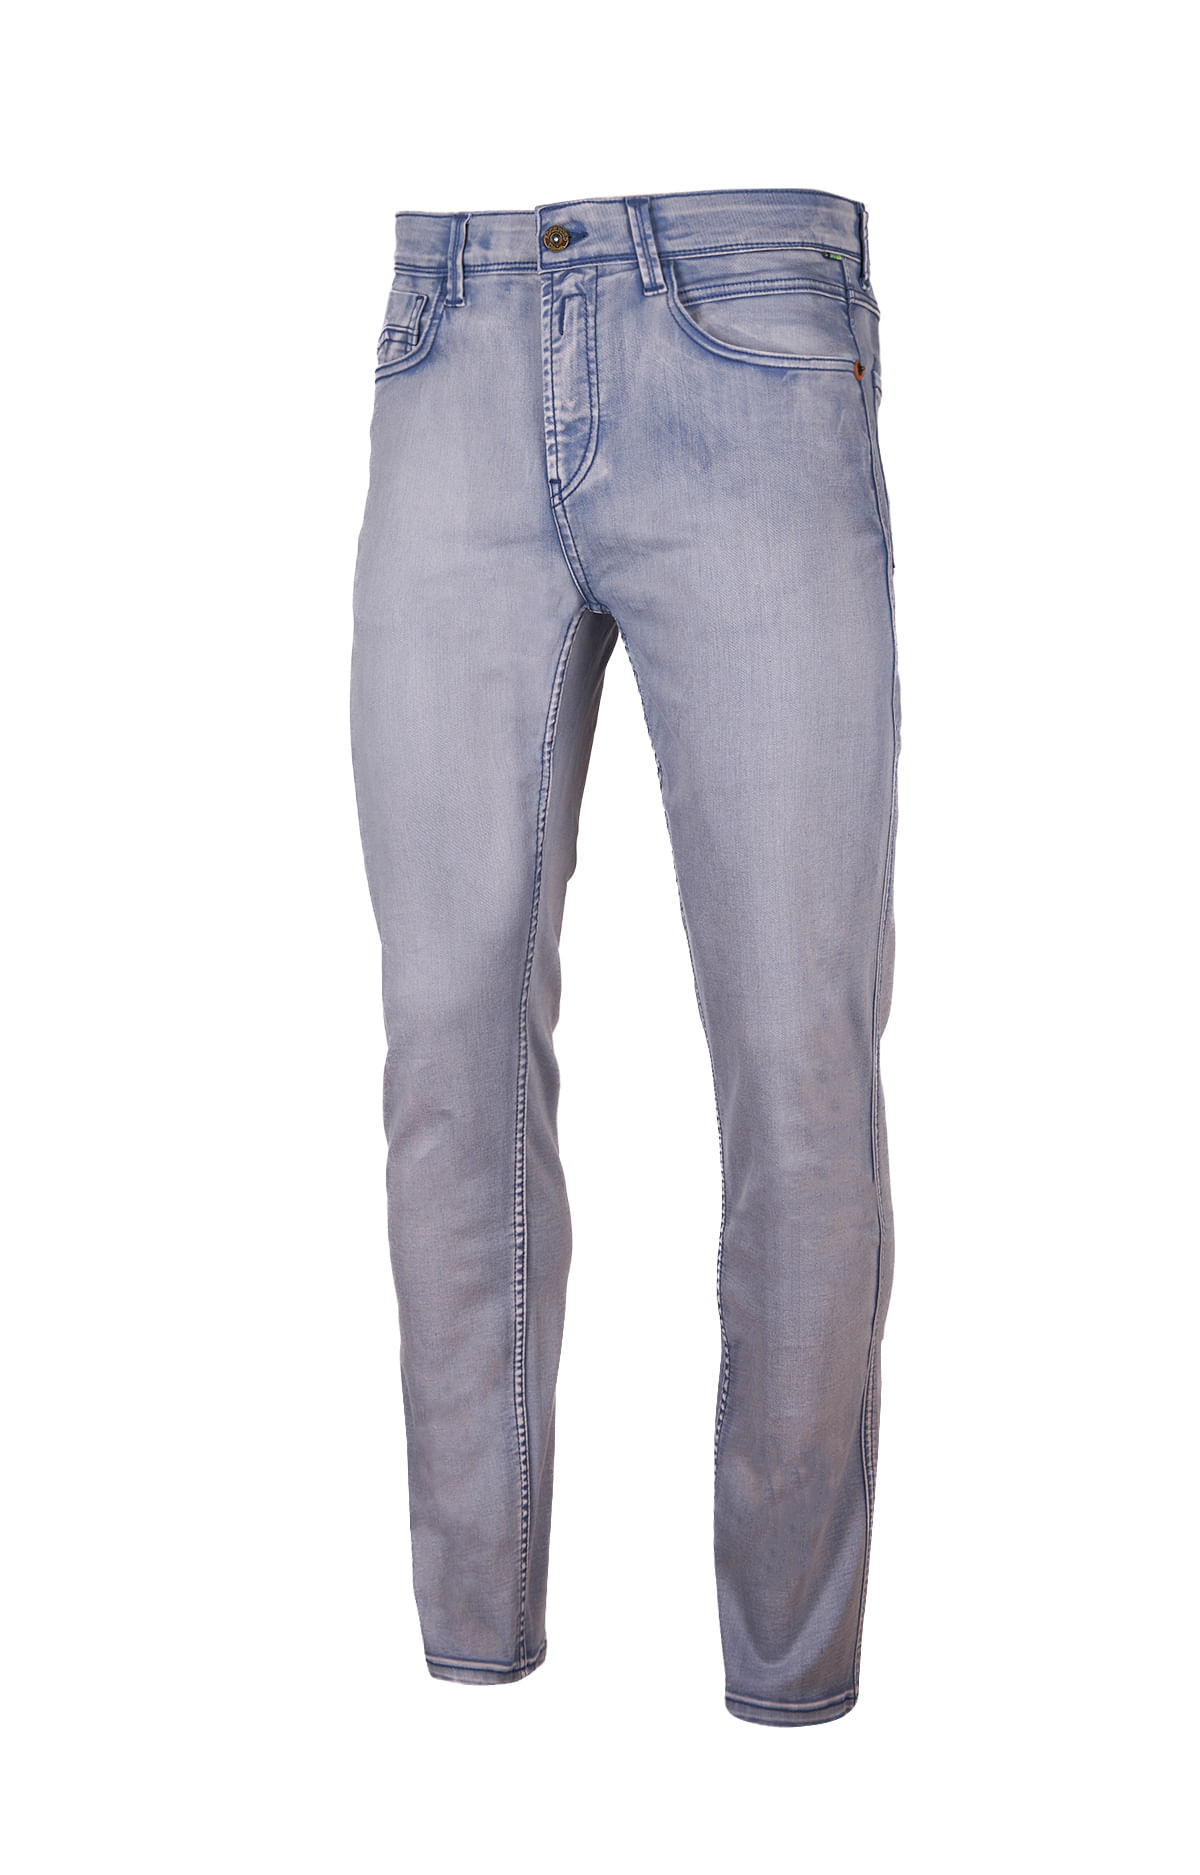 Jeans Natural Flex Hombre Baycolor Azul Rockford